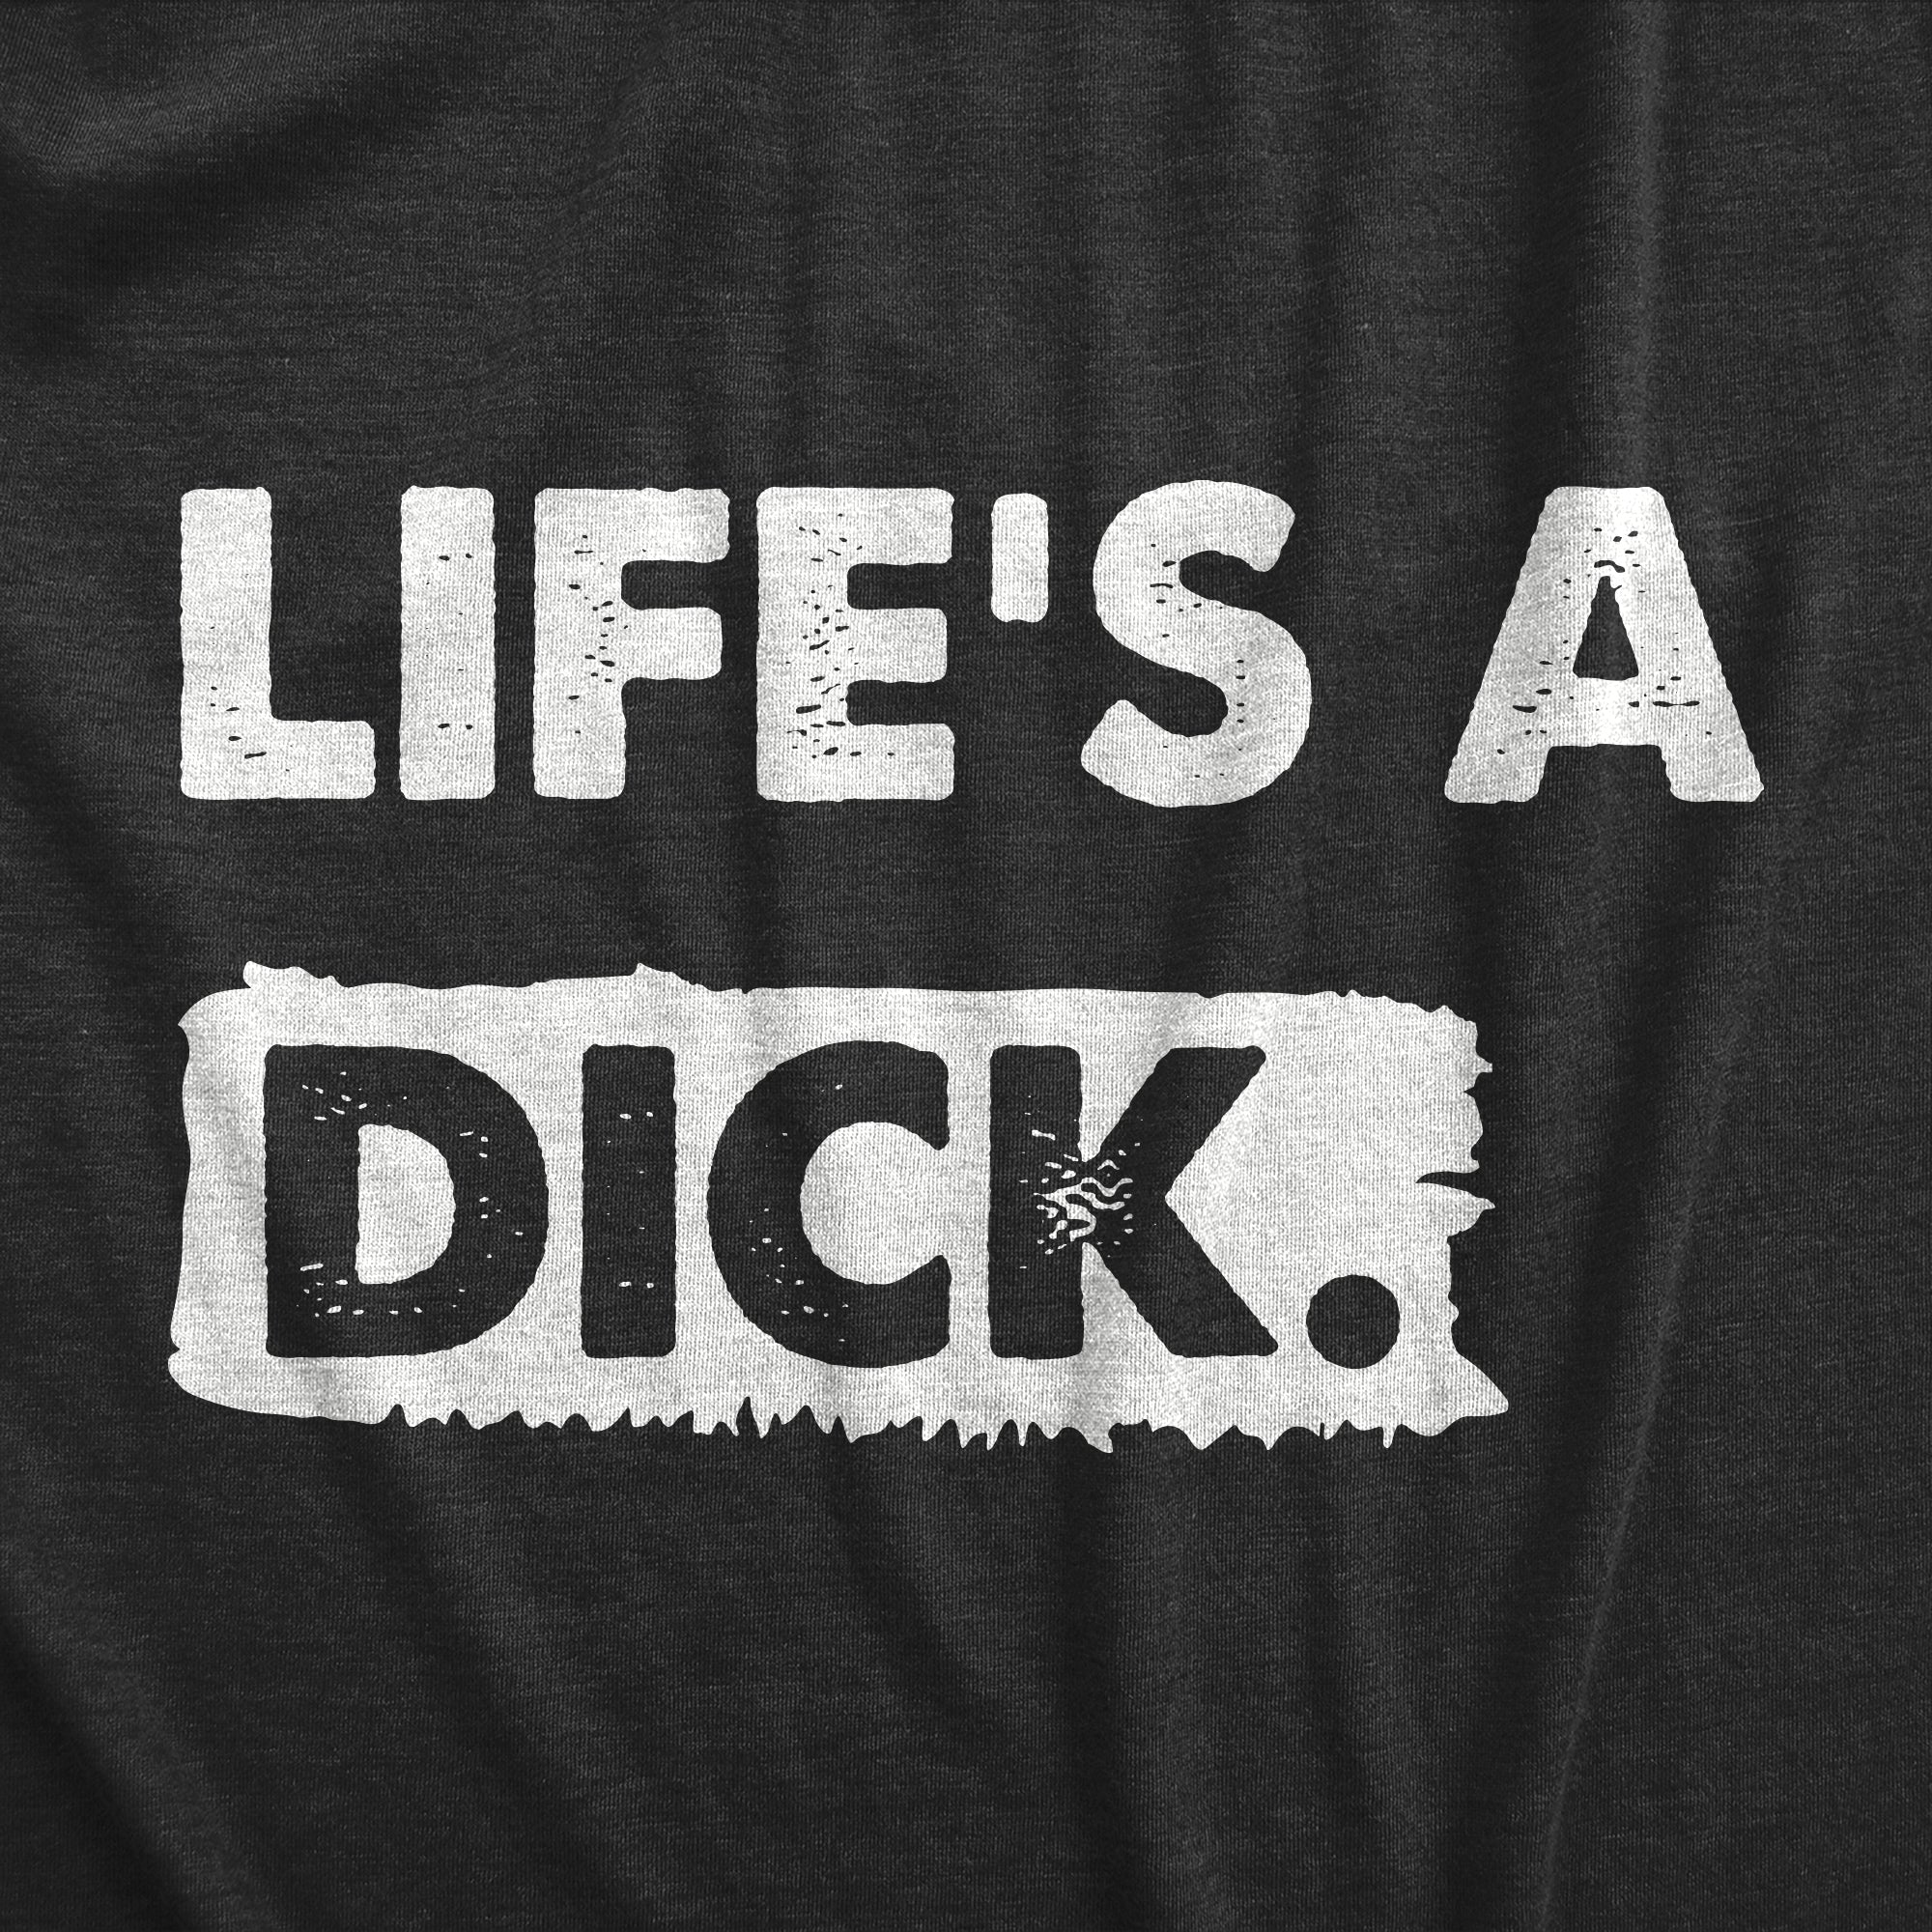 Funny Heather Black - DICK Lifes A Dick Mens T Shirt Nerdy Sarcastic Tee